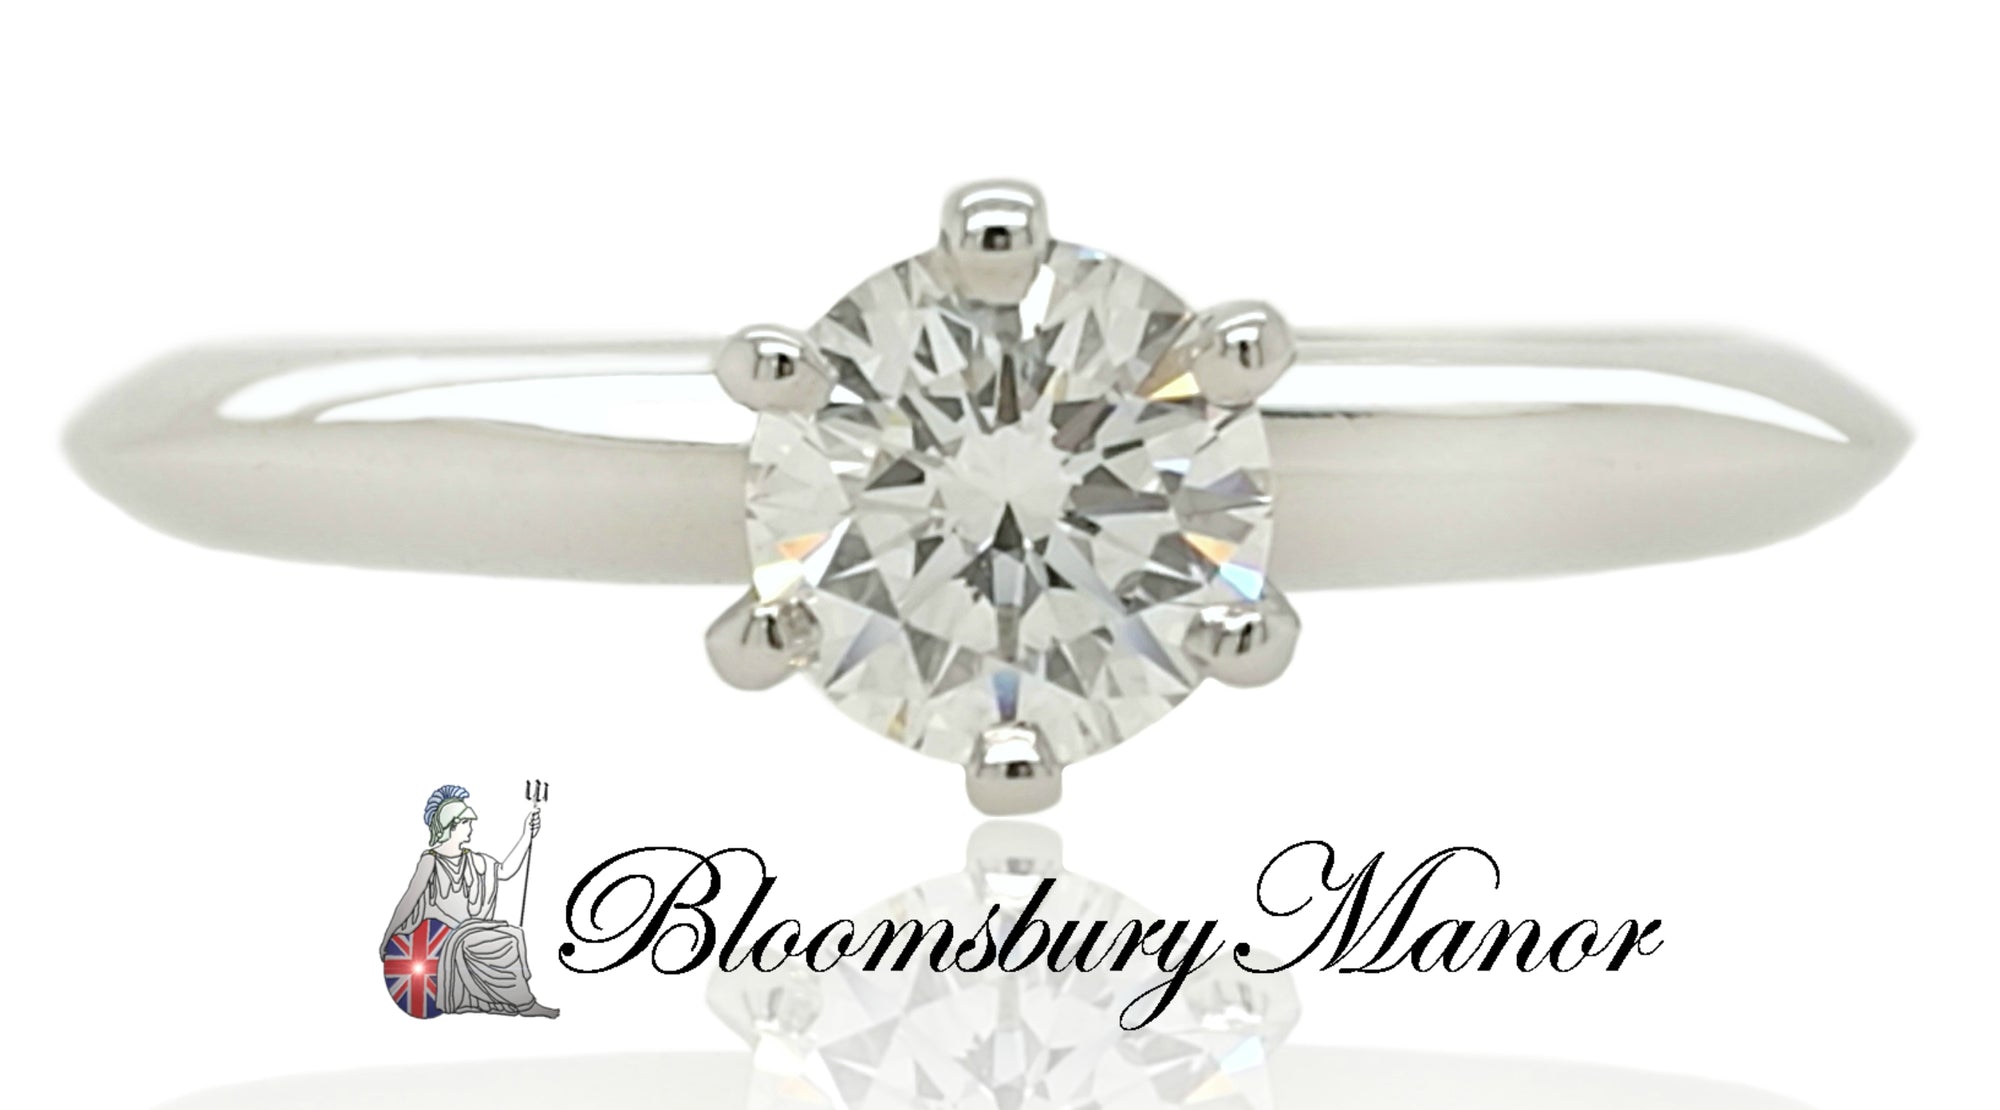 Tiffany & Co. 0.34ct H/VVS1 Round Brilliant Cut Diamond Engagement Ring